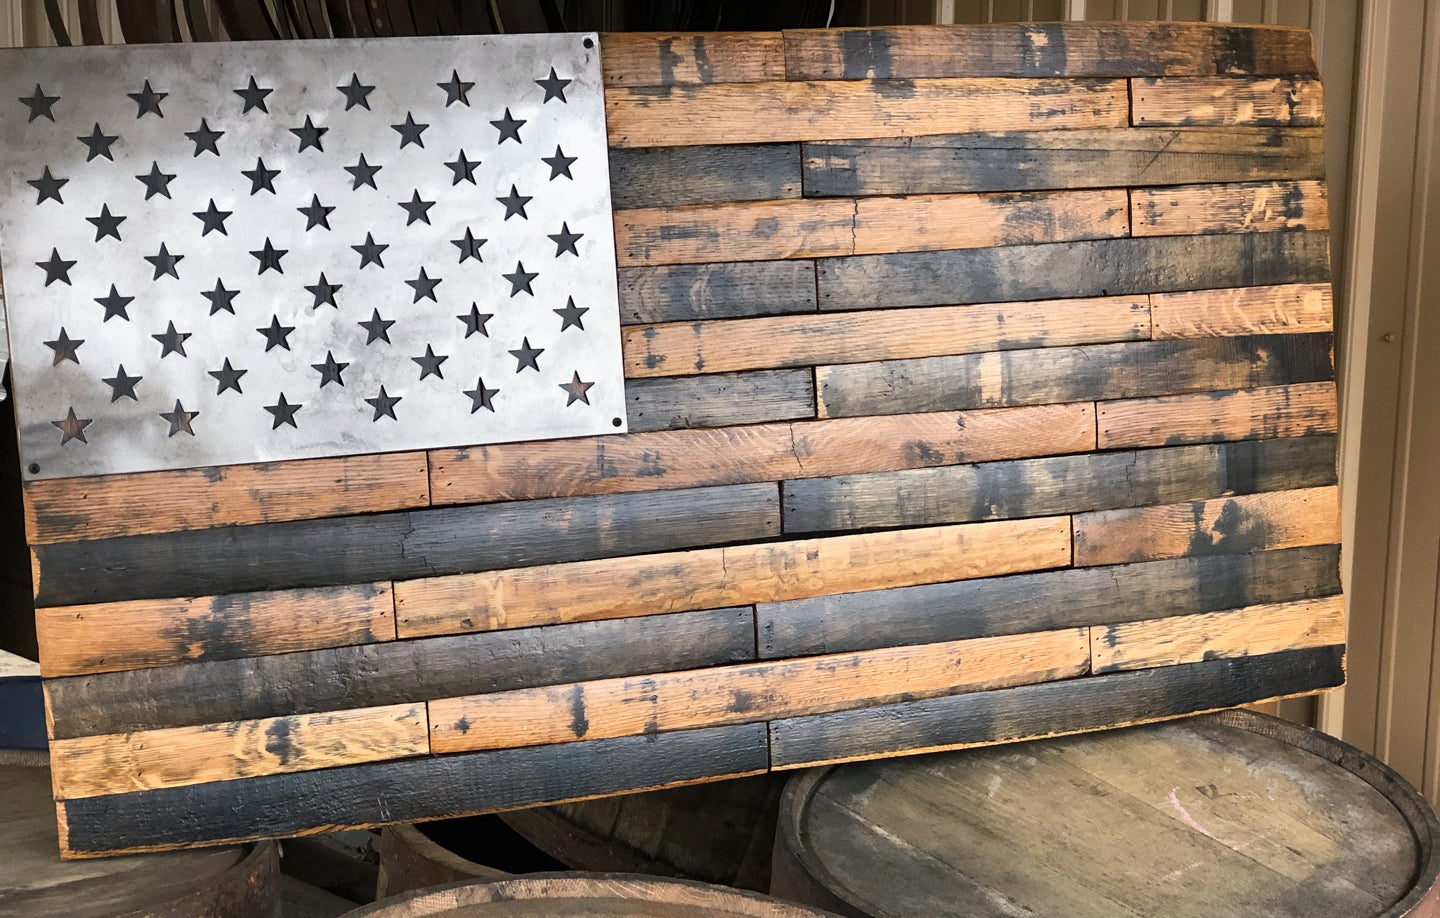 Life after bourbon: Wright’s repurposing used barrels